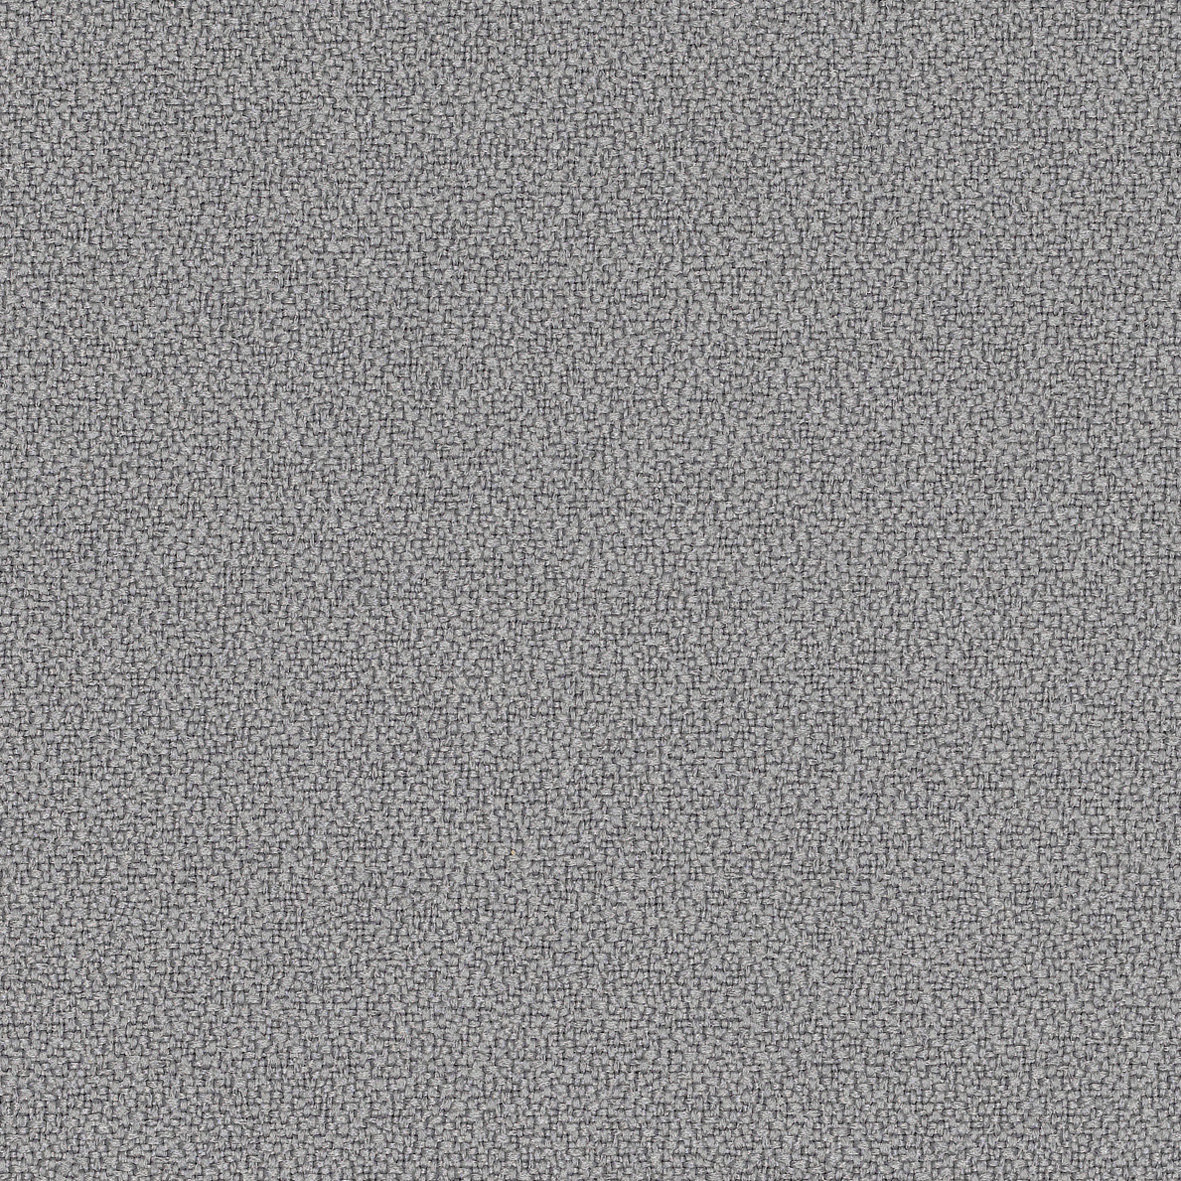 Softline bordskærmvæg grå B2000xH450 mm